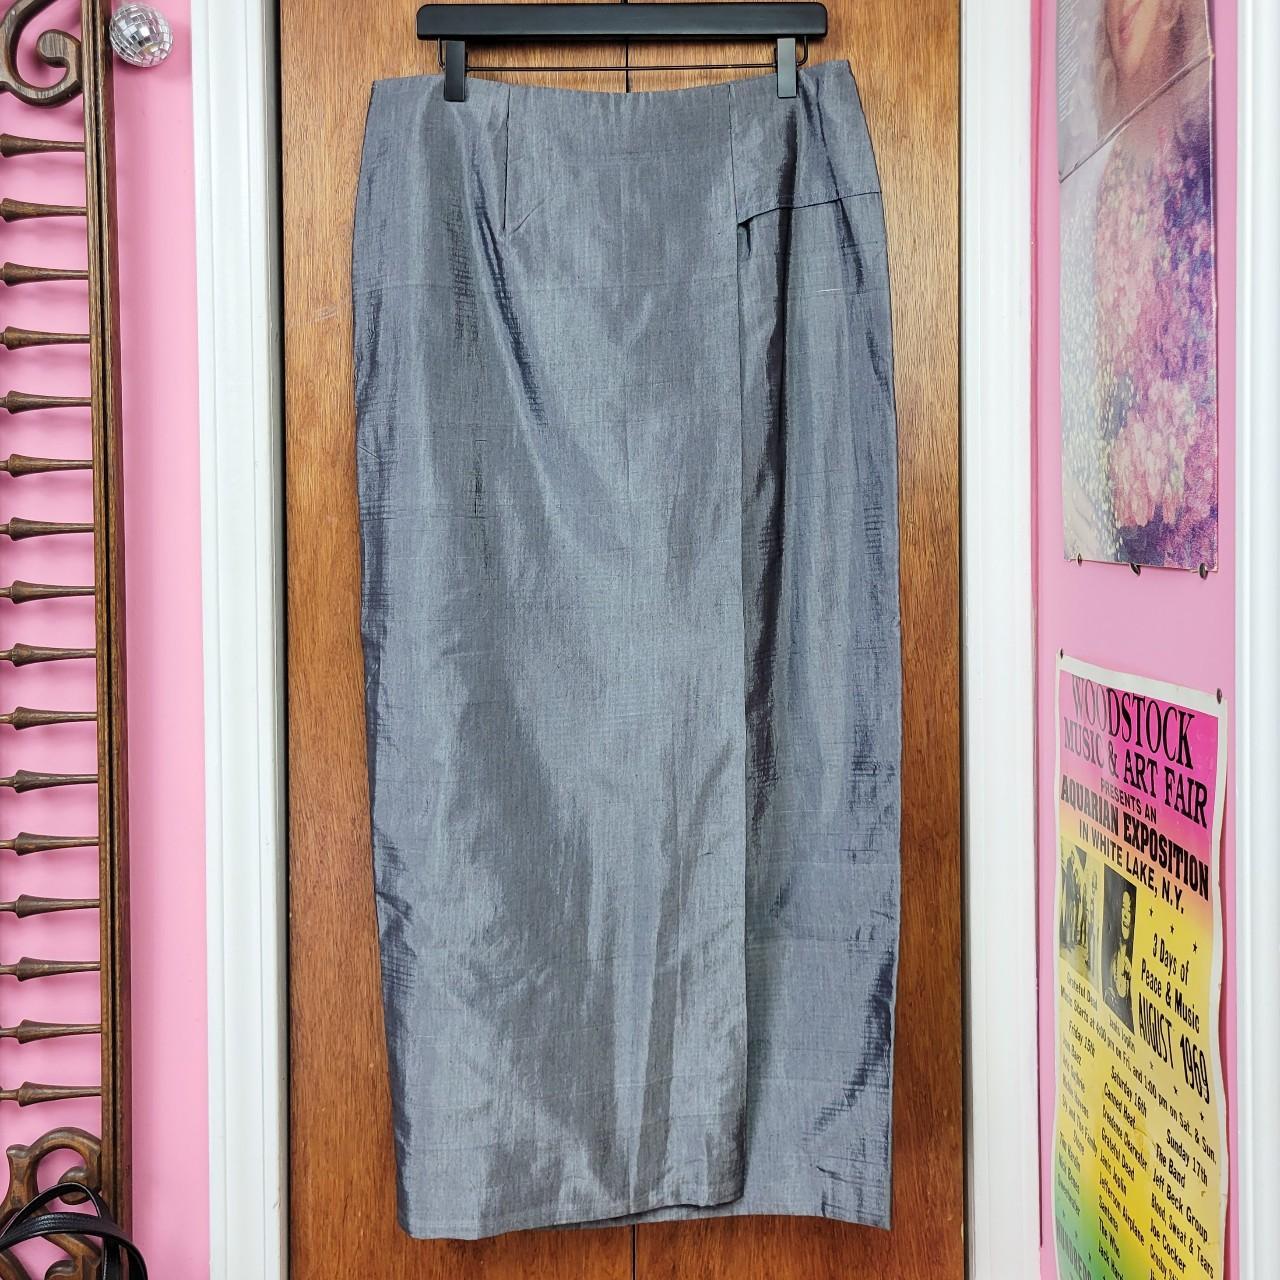 Product Image 3 - Handmade silver maxi skirt 🖤

Vintage